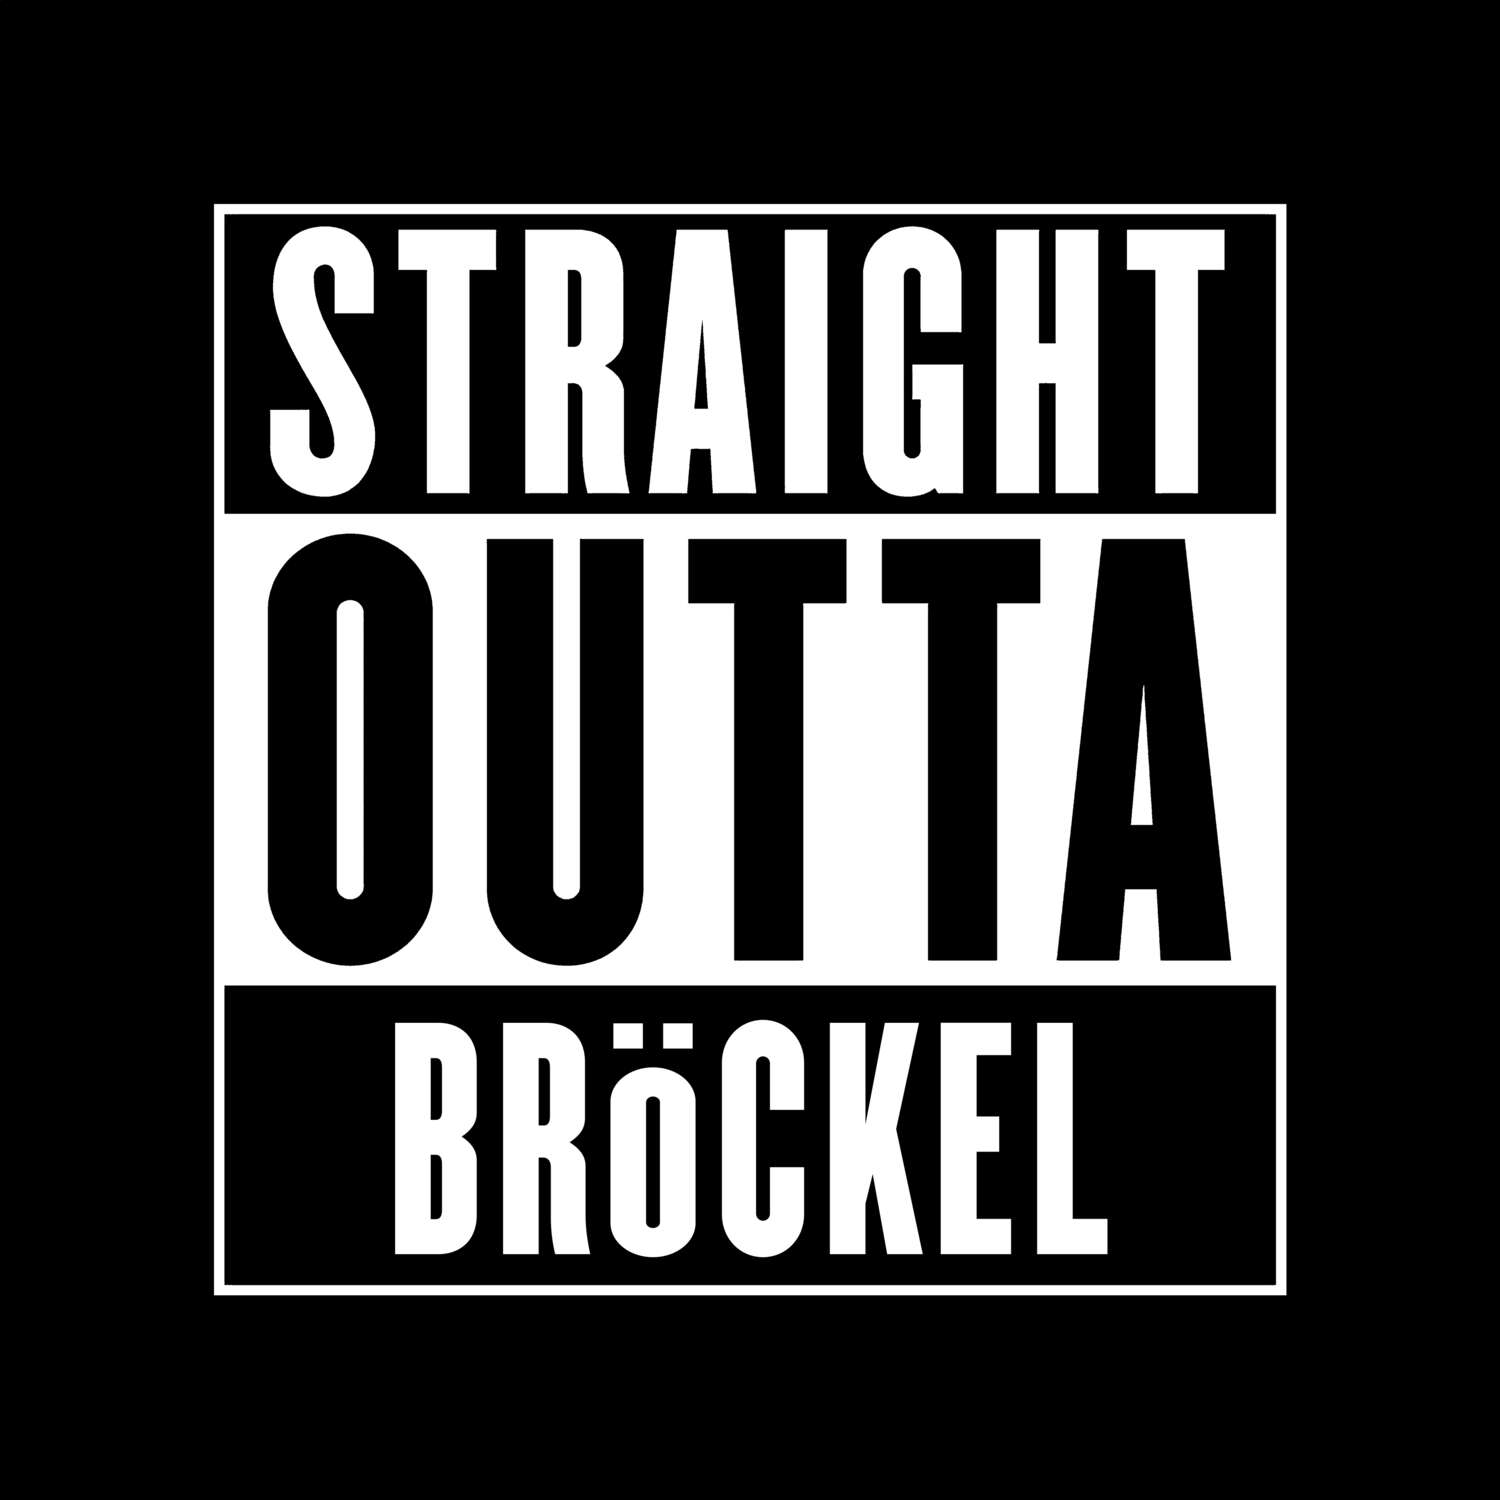 Bröckel T-Shirt »Straight Outta«